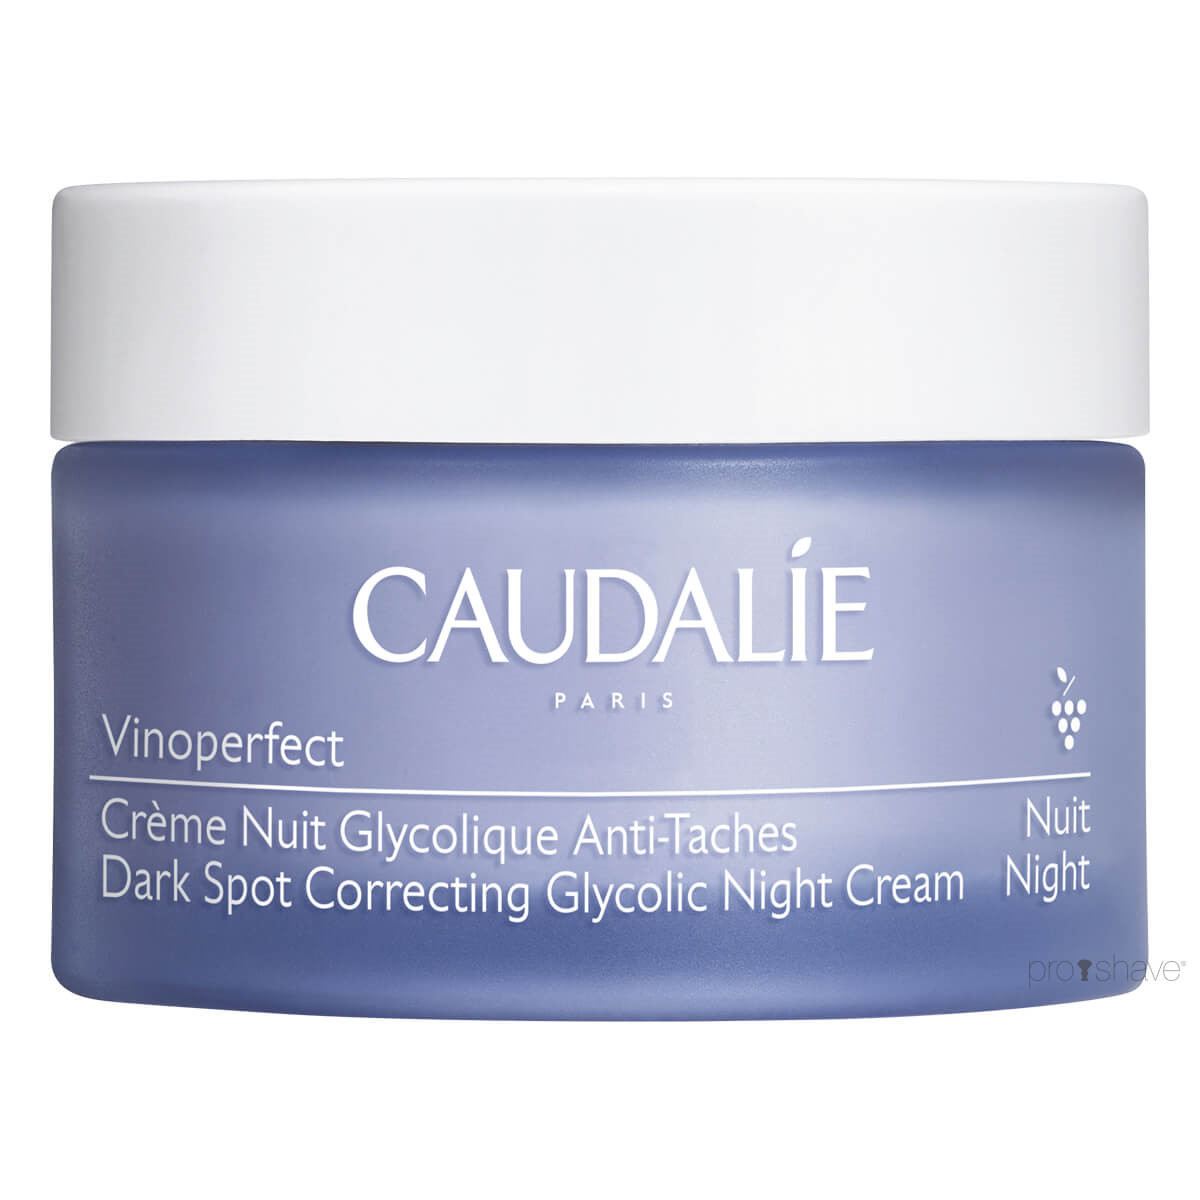 Caudalie Vinoperfect, Glycolic Night Cream, 50 ml.